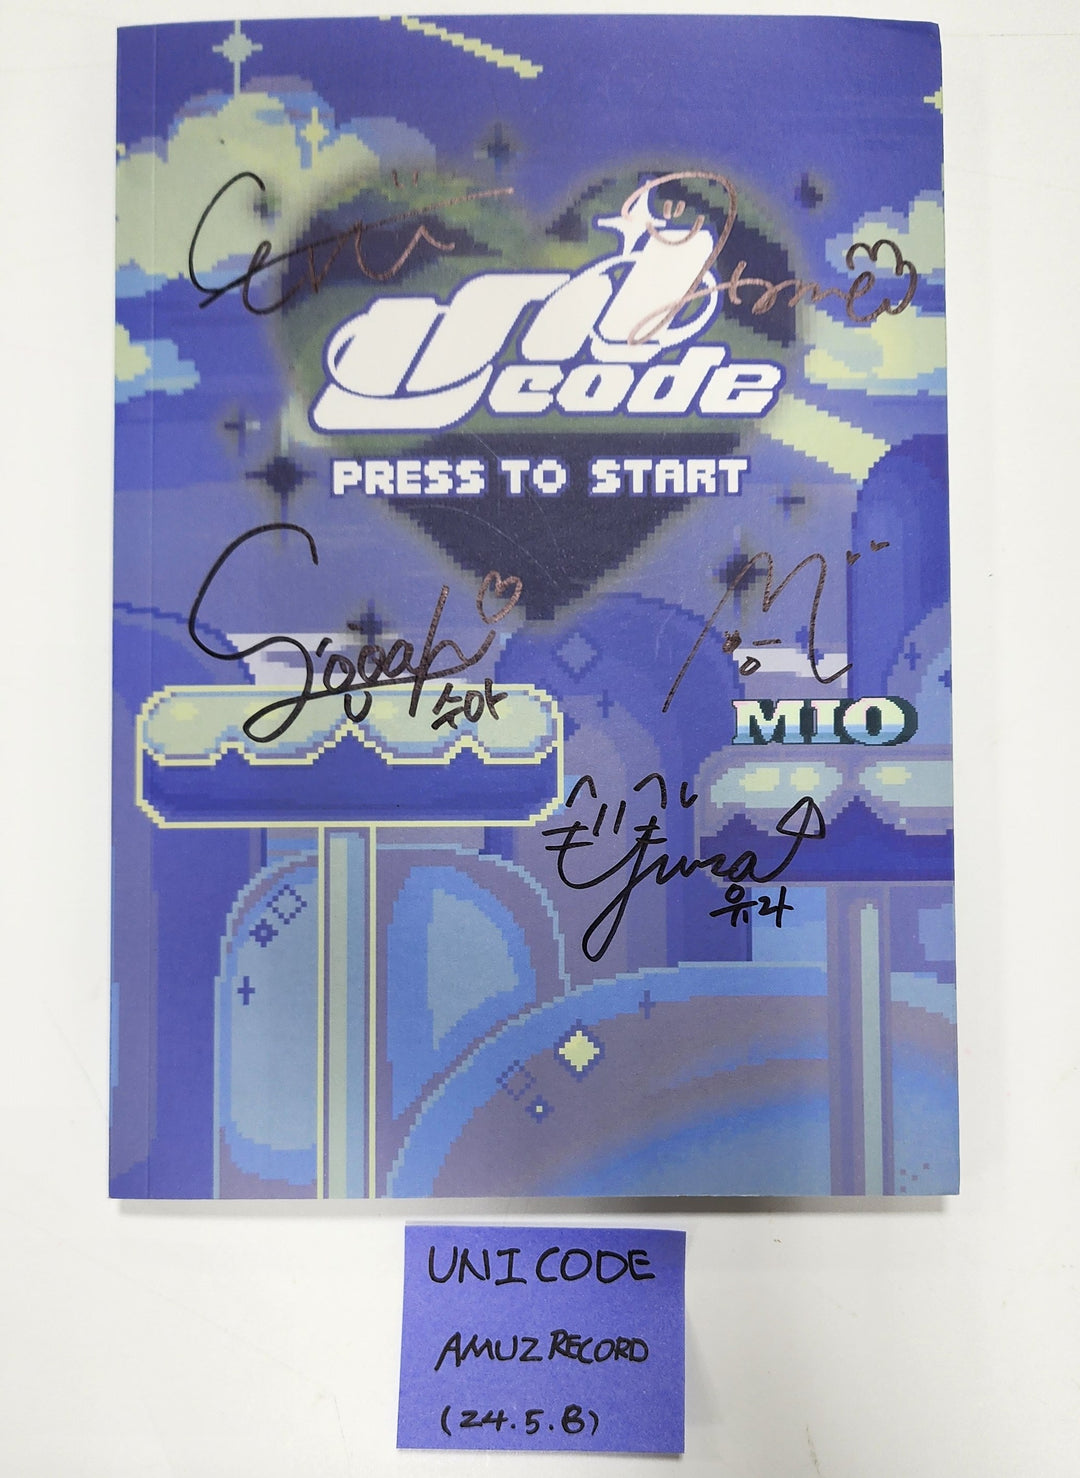 UNICODE "Hello World : Code J" - Hand Autographed(Signed) Album [24.5.8]